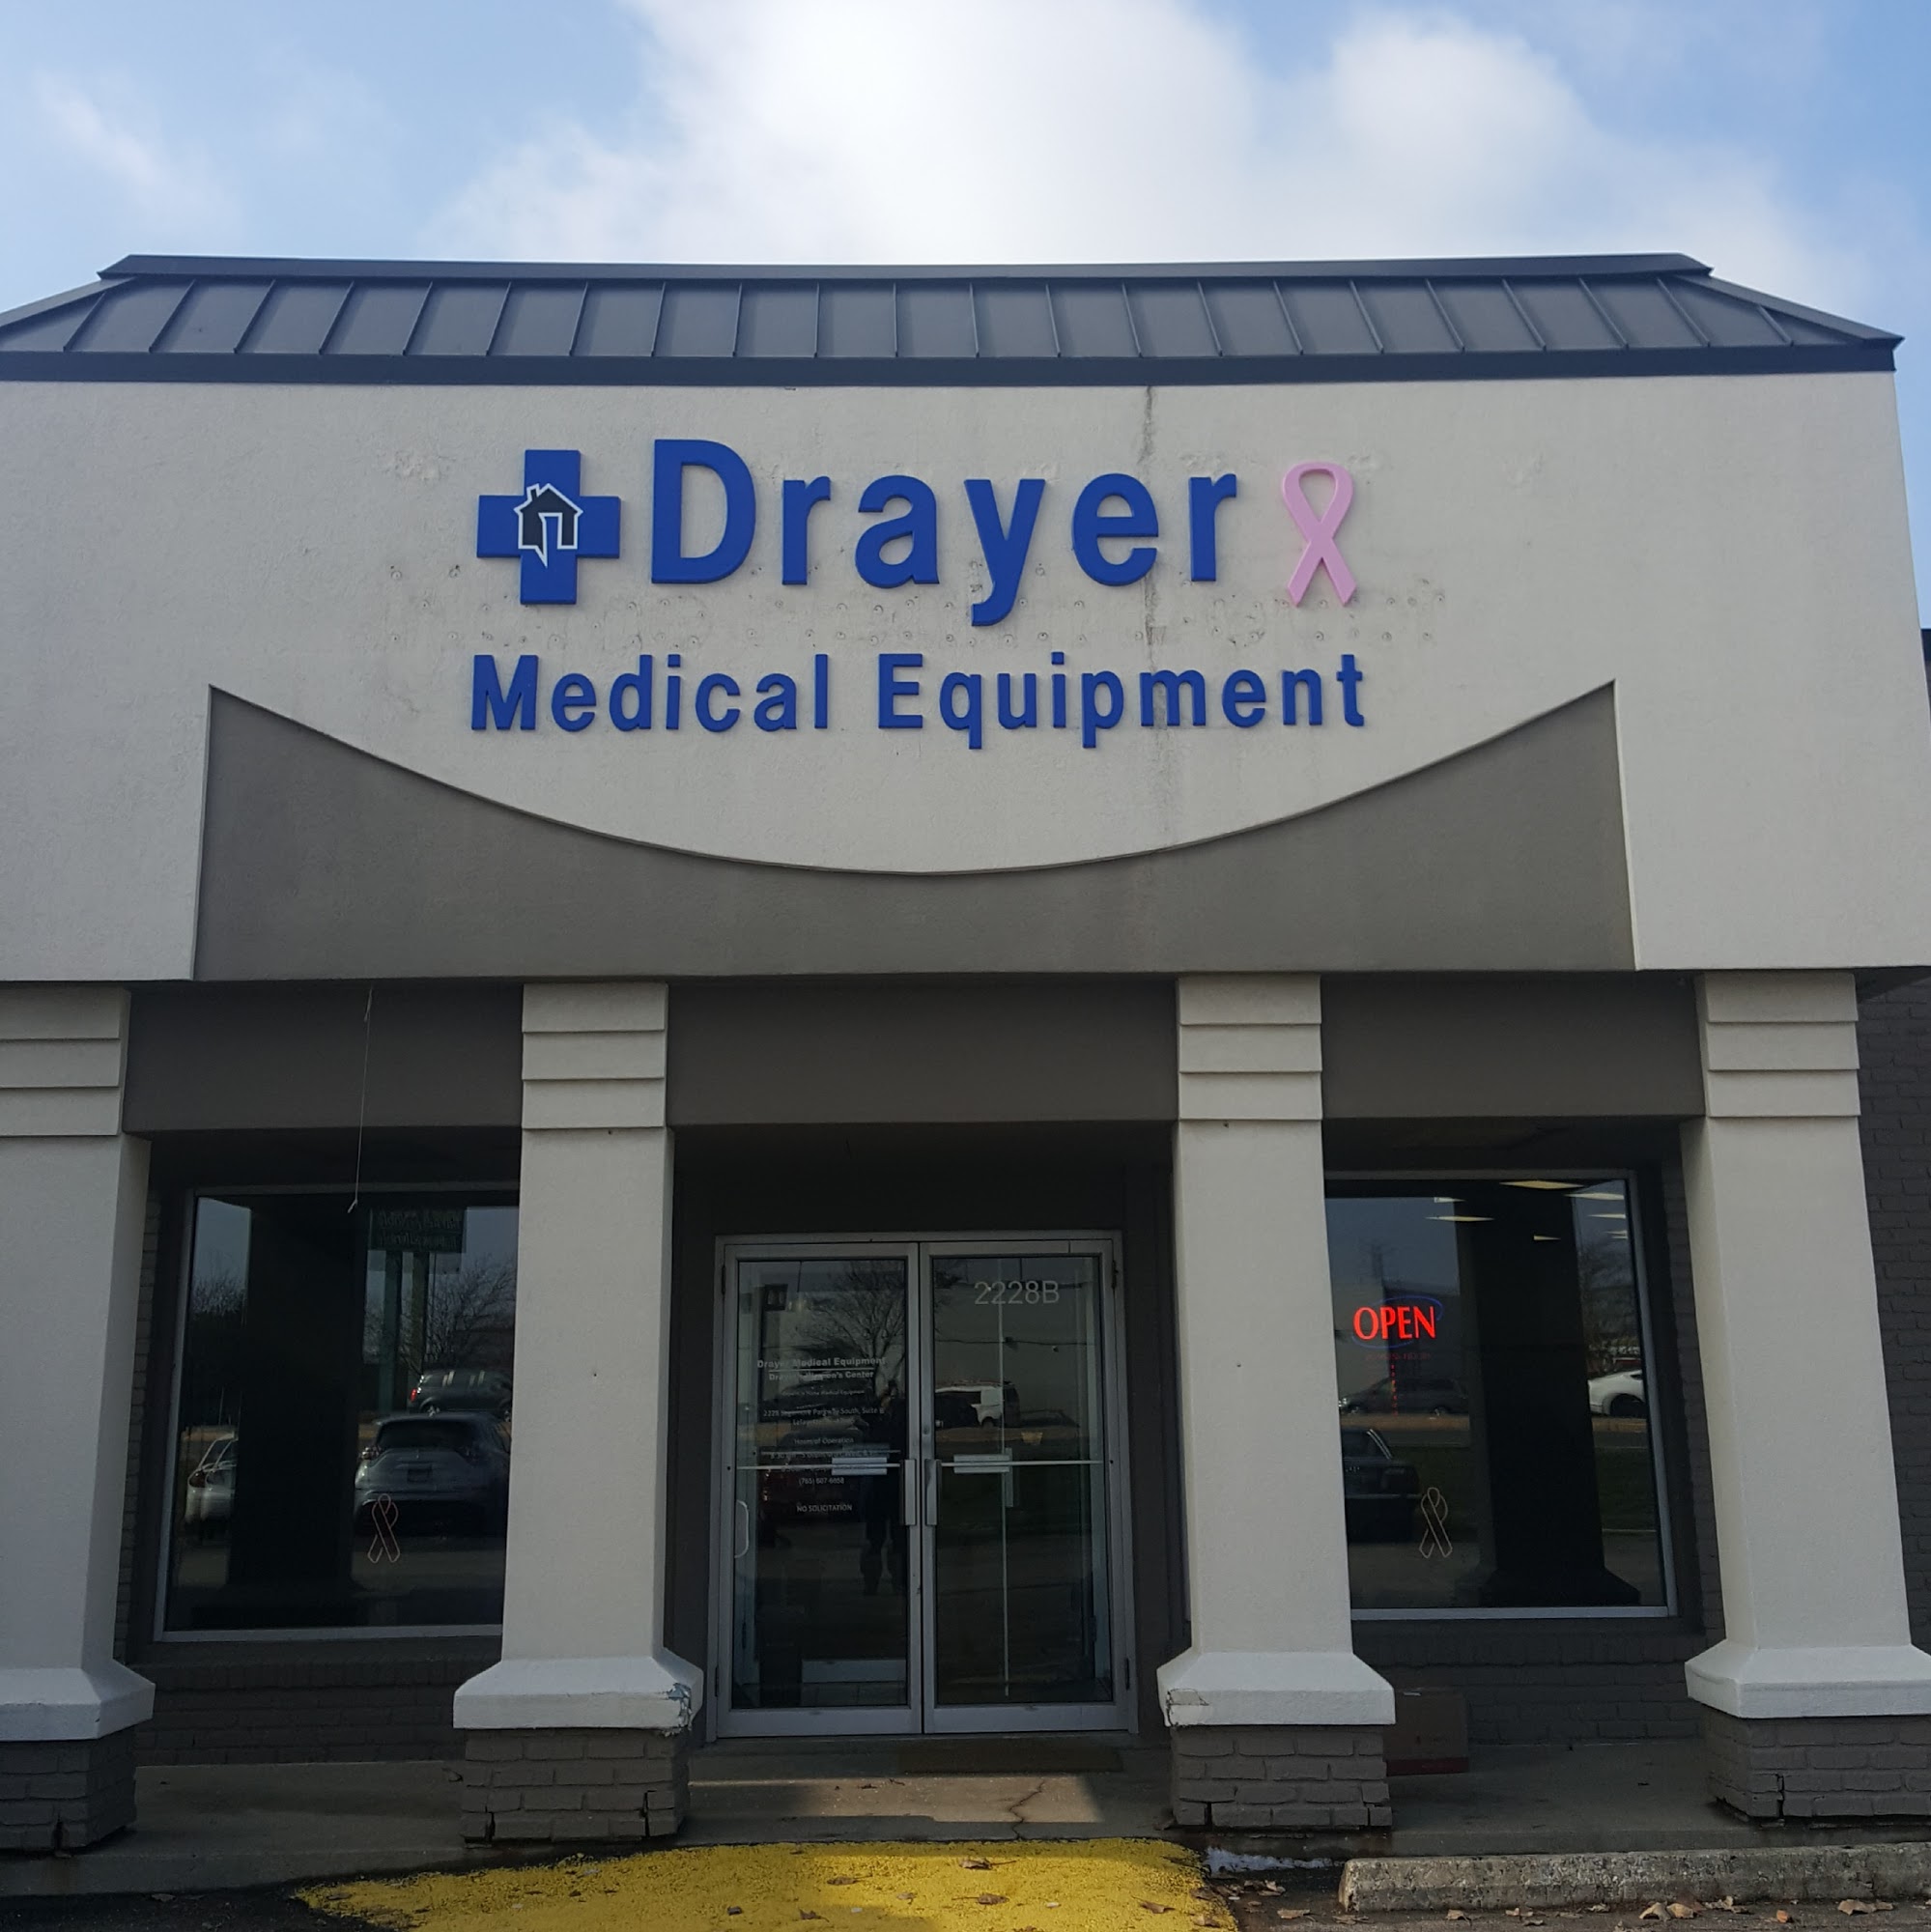 Drayer Medical Equipment